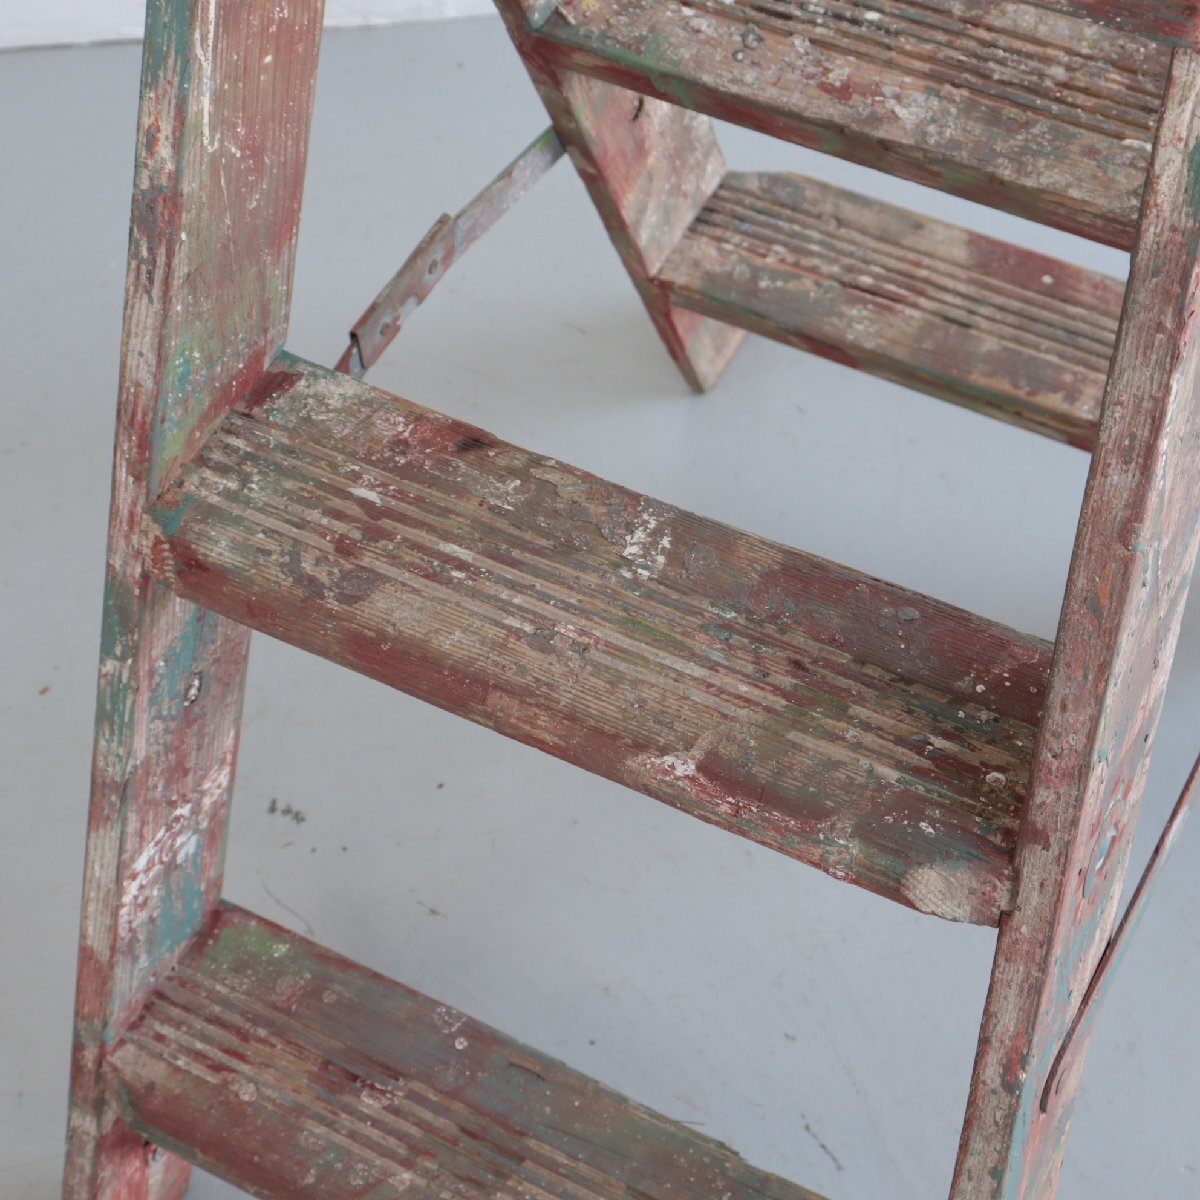  Vintage 3 step stepladder / America wooden ladder ladder display store furniture gardening antique paint paint #502-58-133